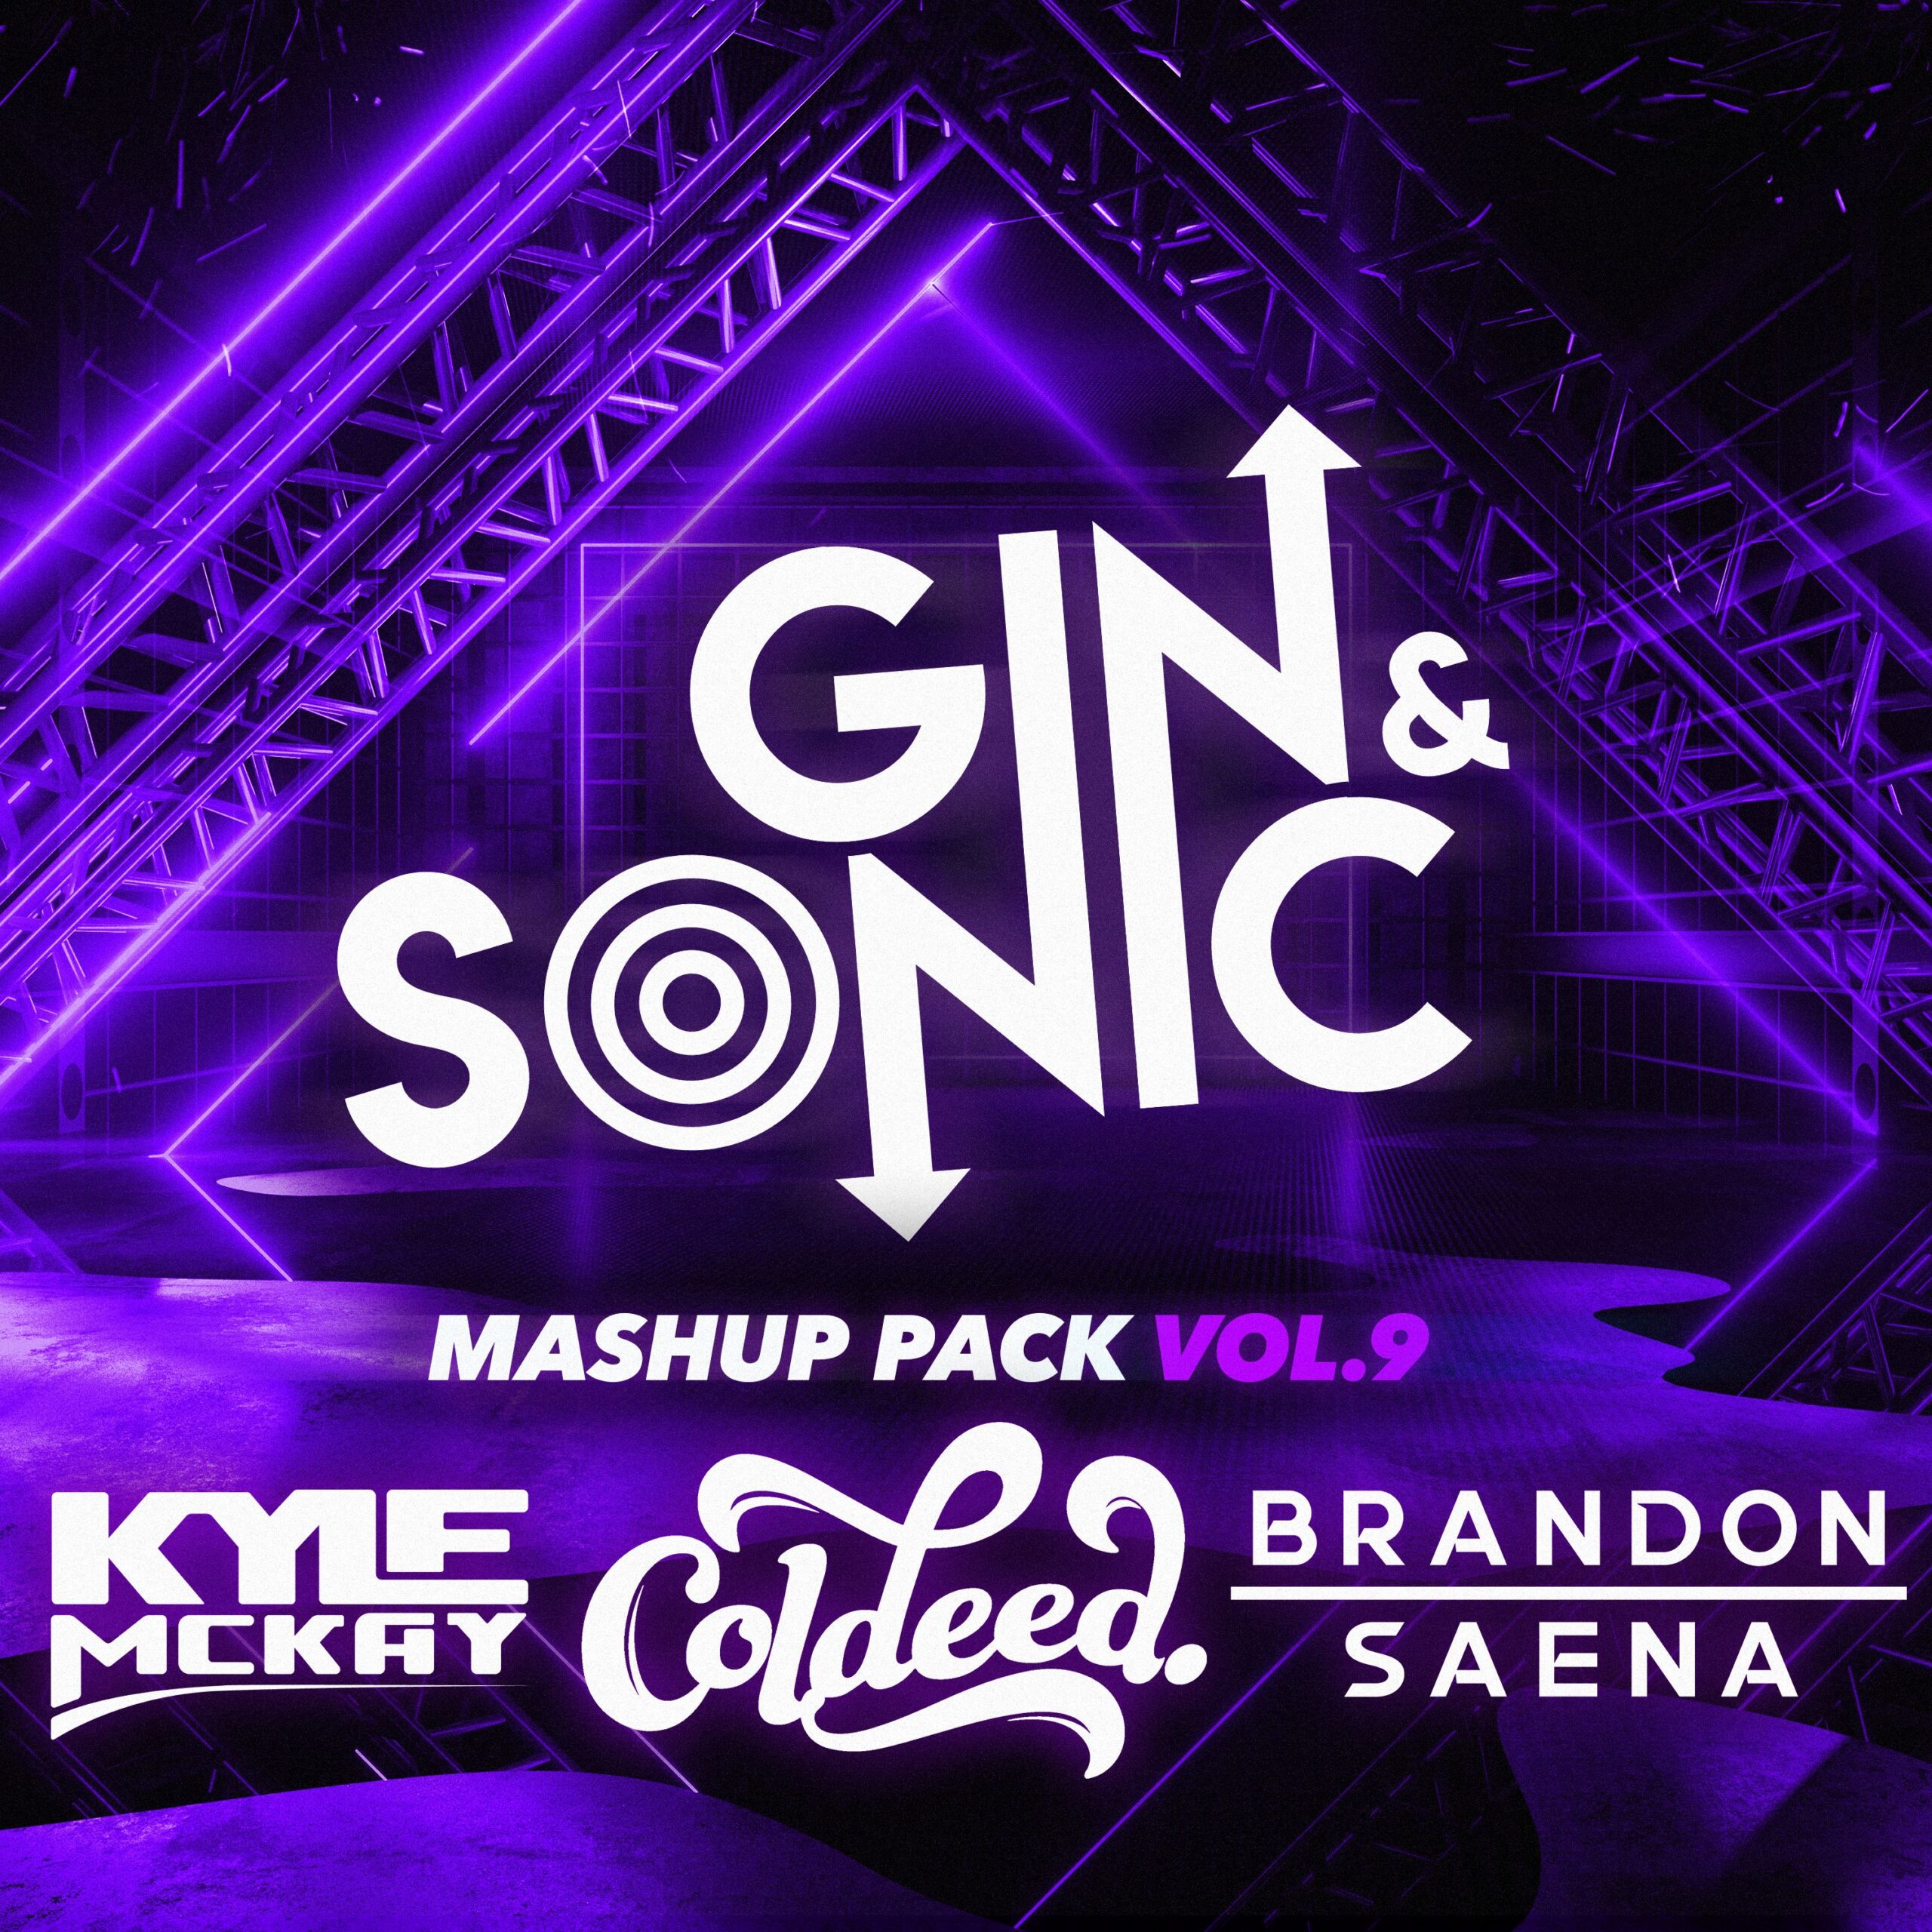 Gin and Sonic Mashup Pack Volume 9